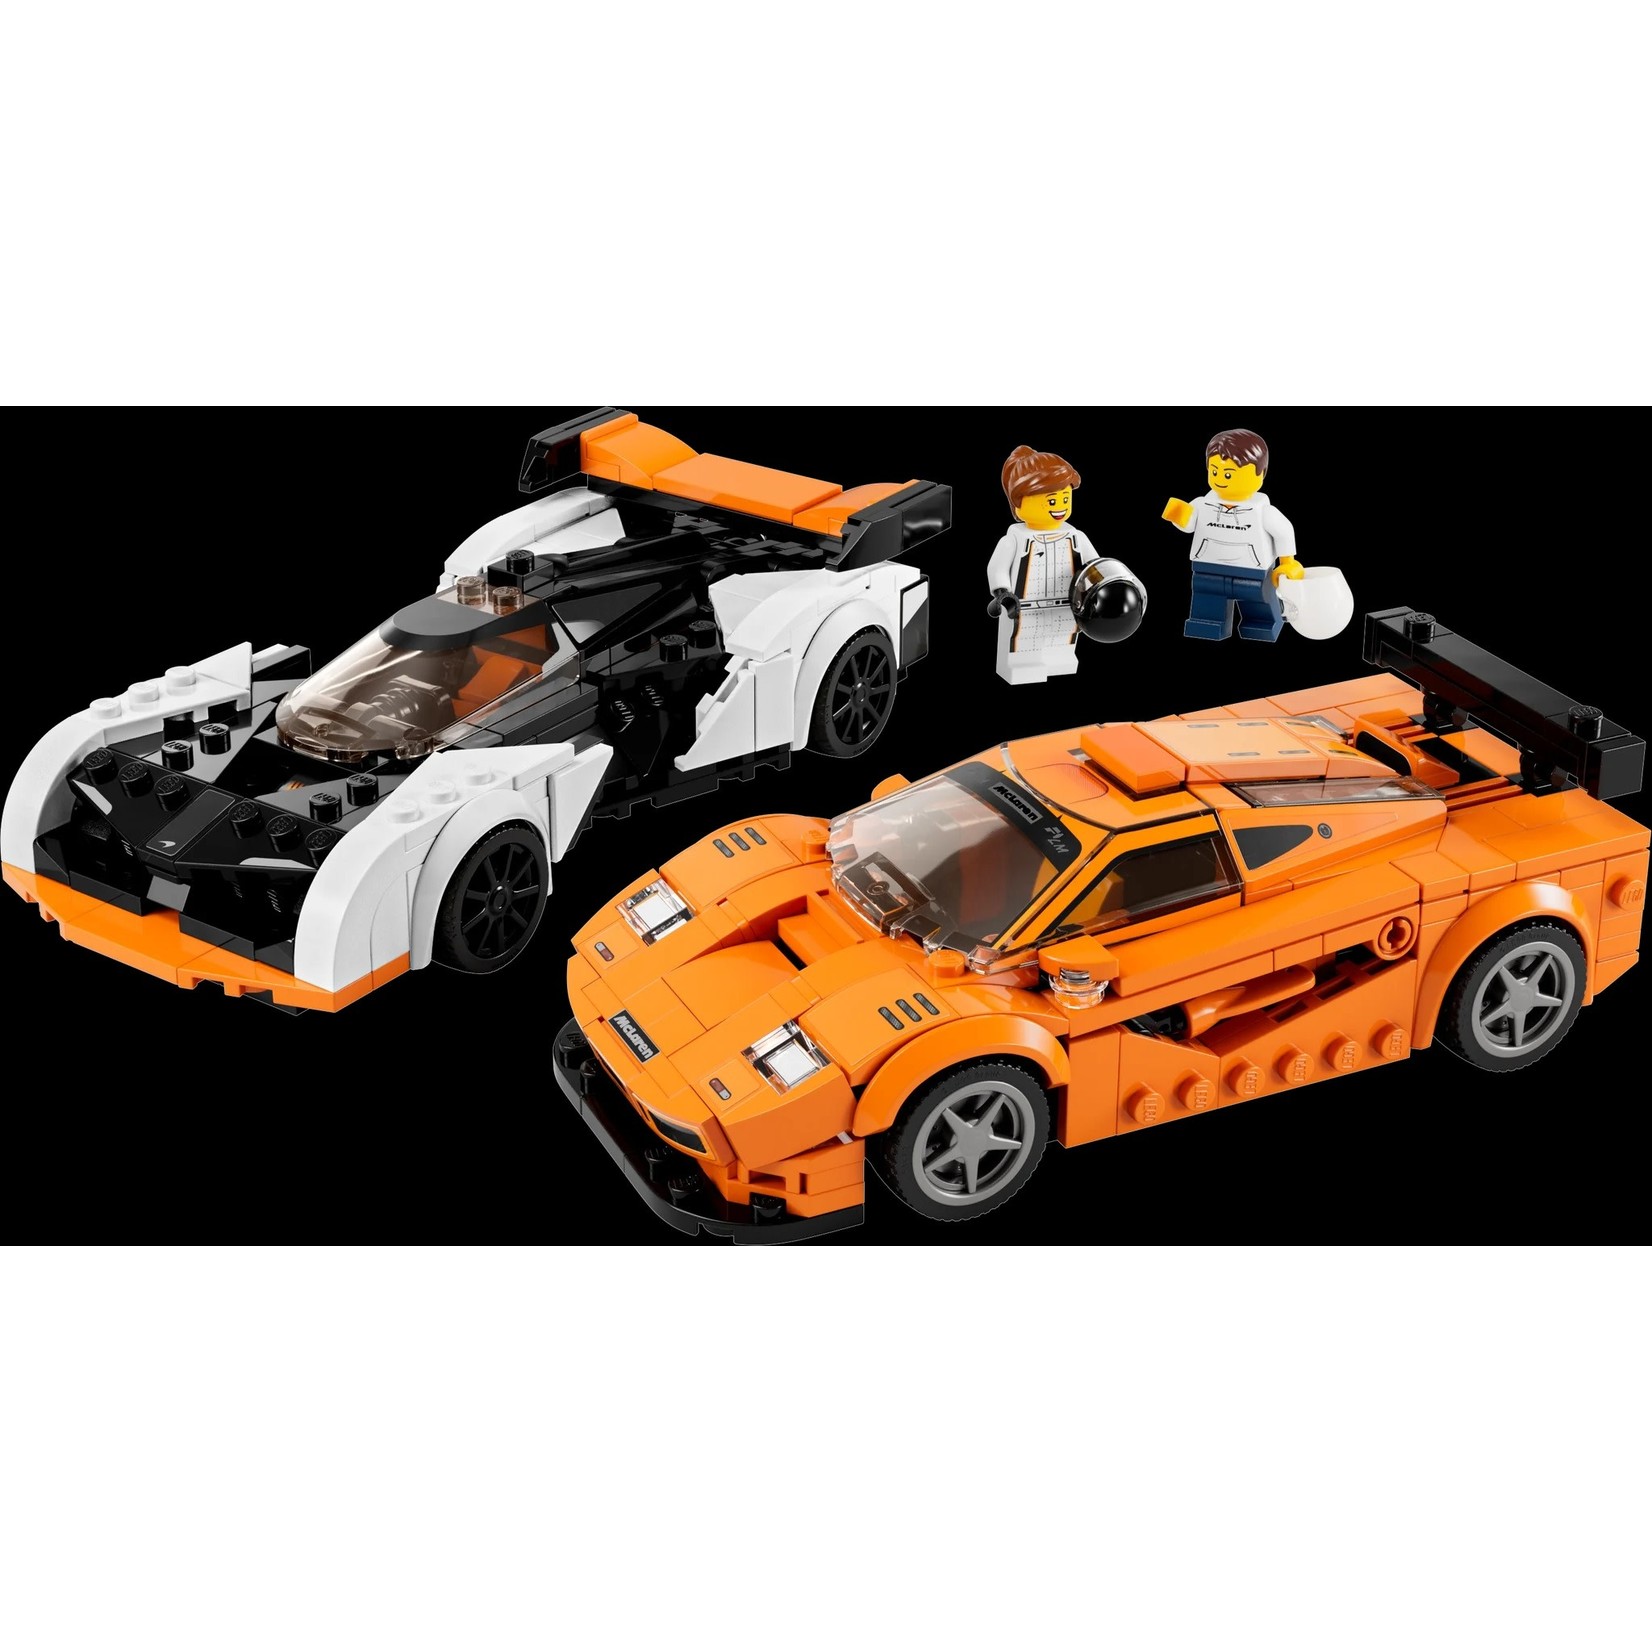 LEGO LEGO Speed Champions McLaren Solus GT & McLaren F1 LM 76918